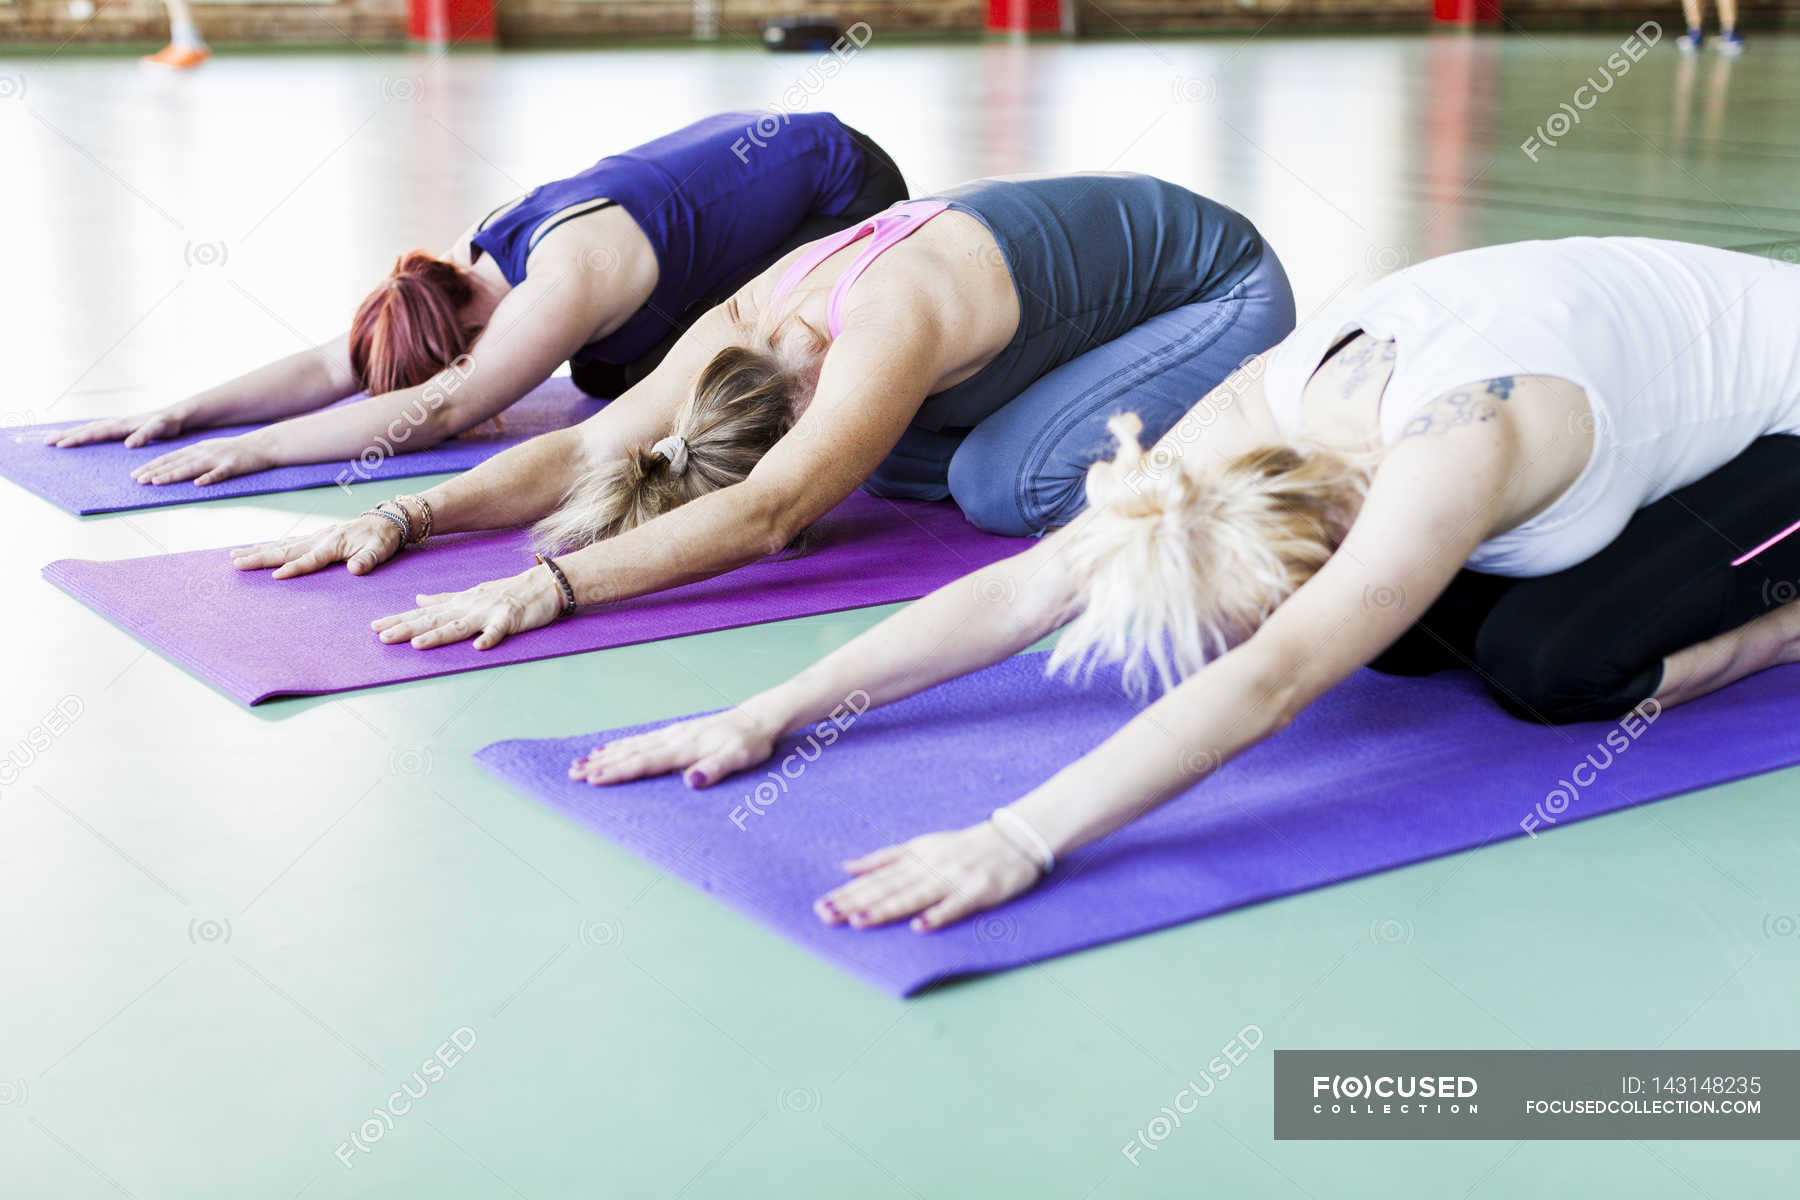 Women exercising on yoga mats — Stock Photo | #143148235